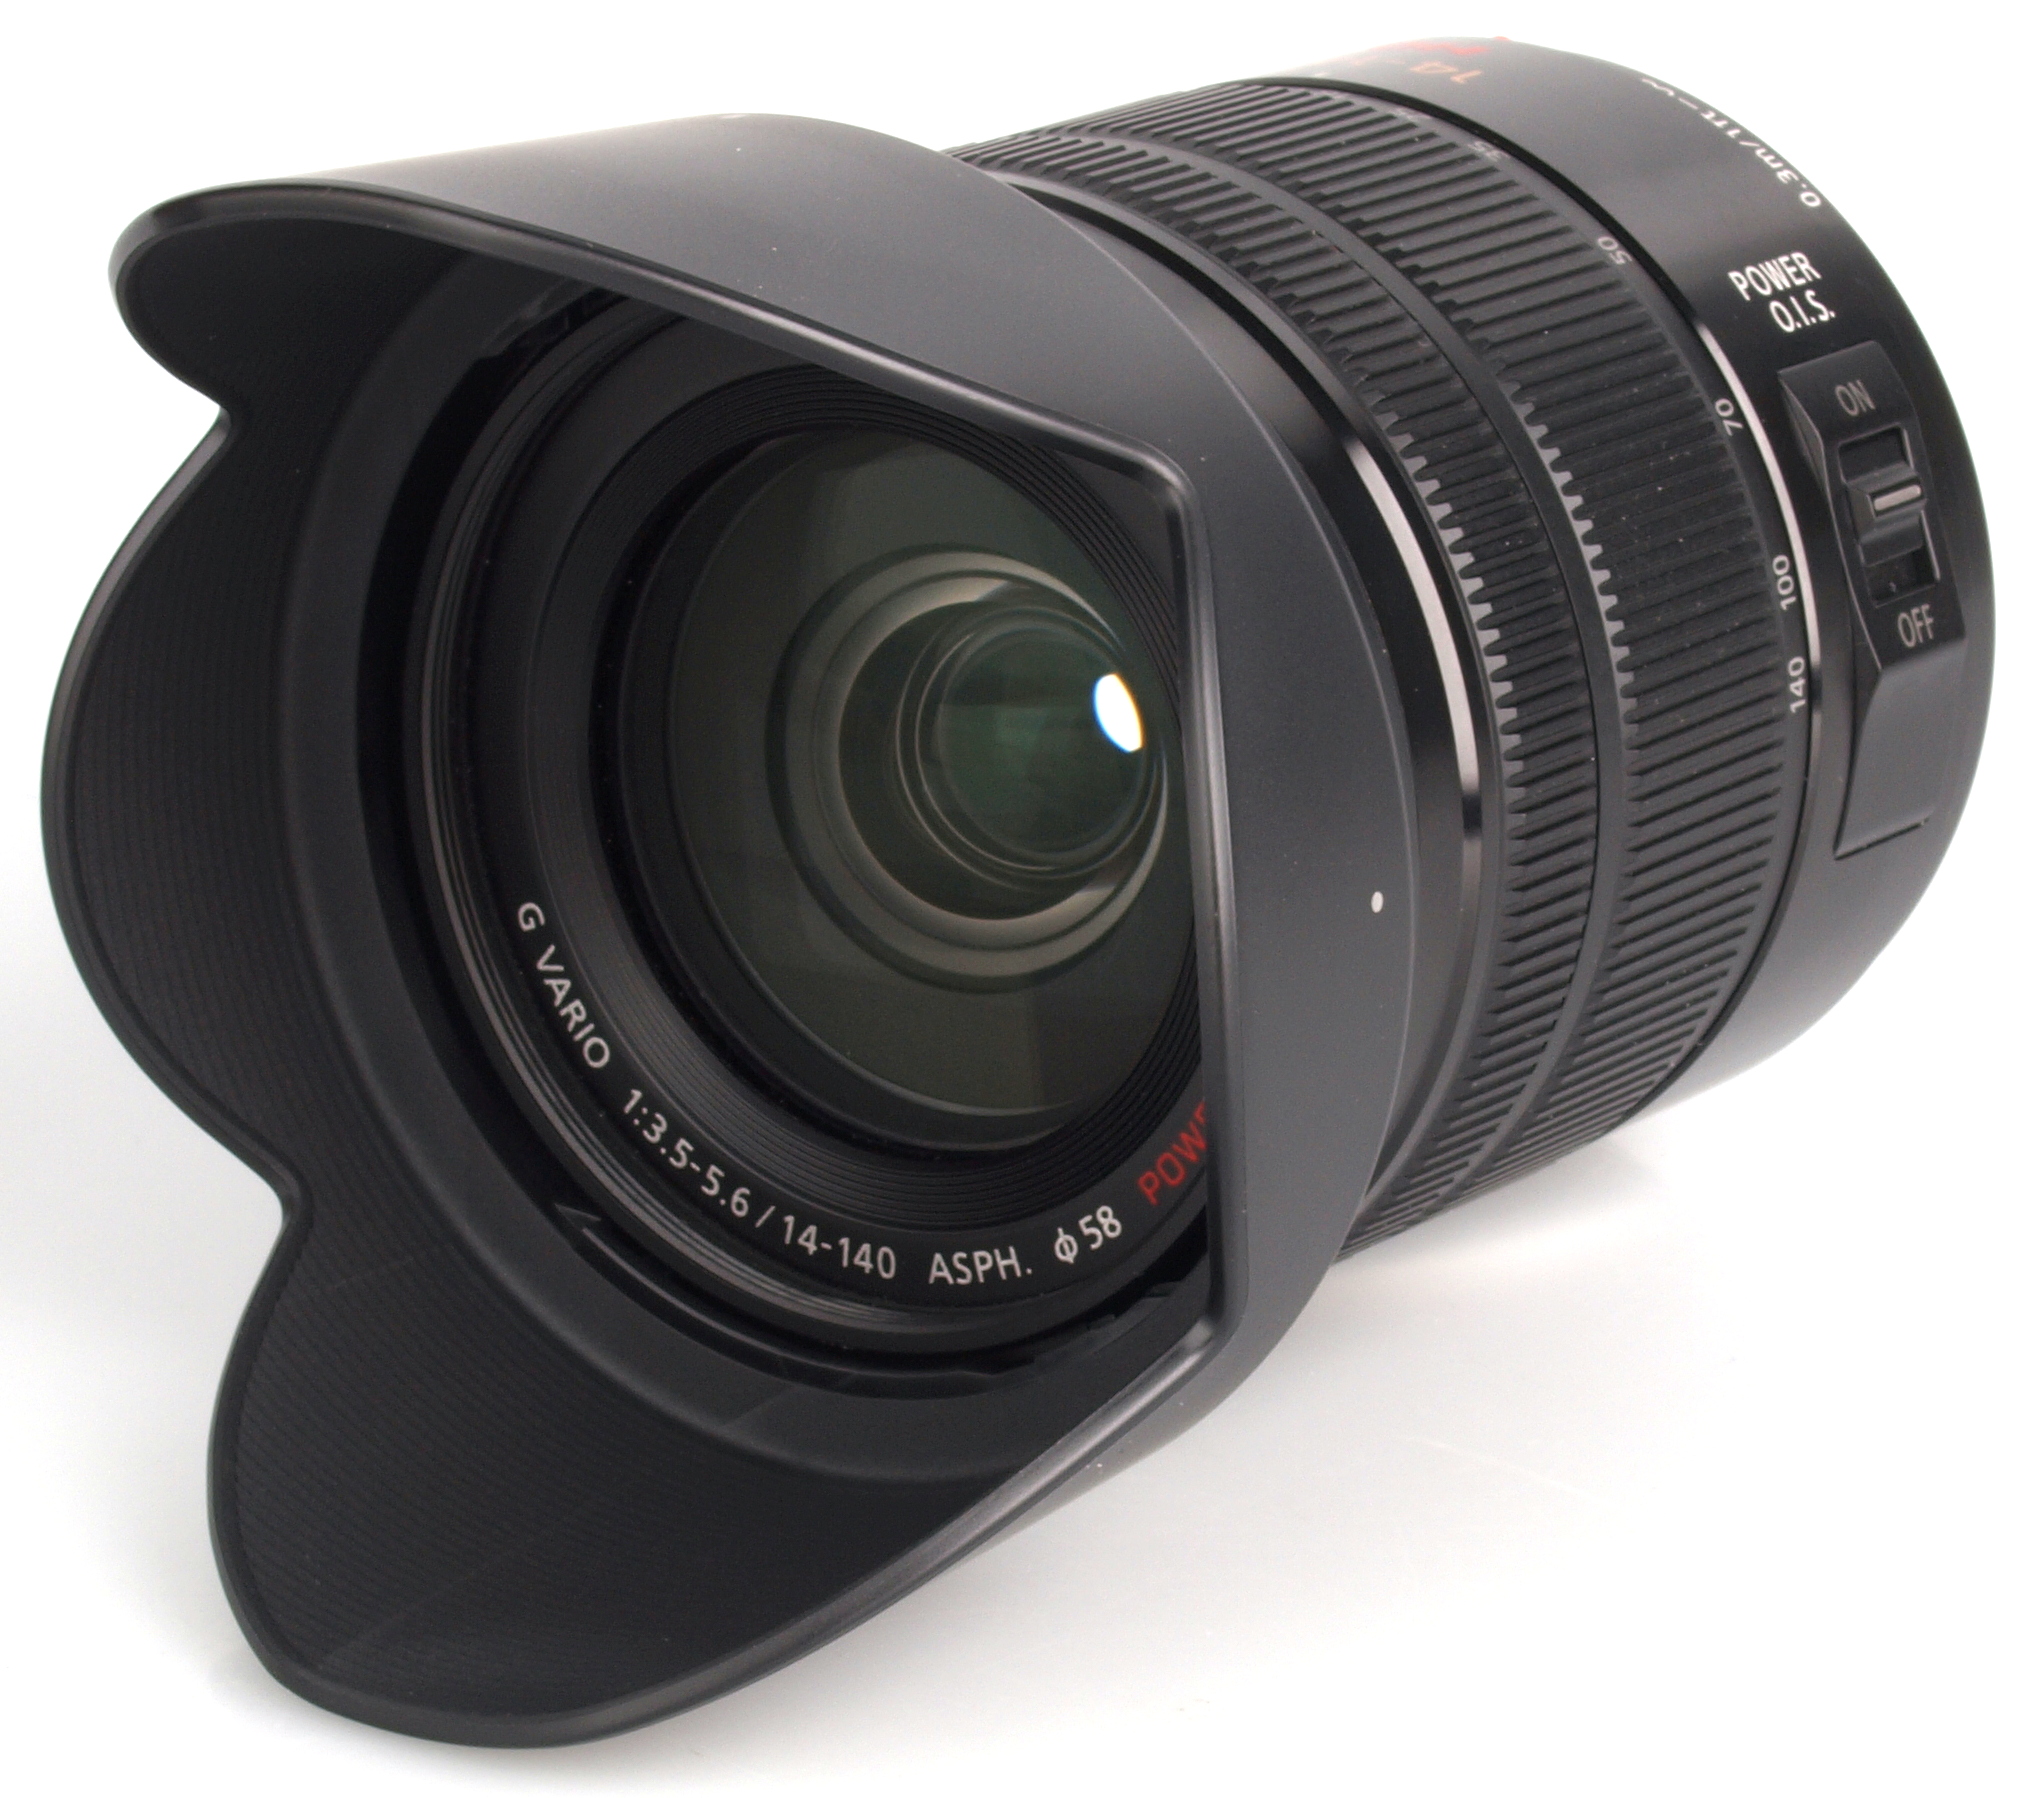 Panasonic Lumix G Vario 14-140mm f/3.5-5.6 Lens Review